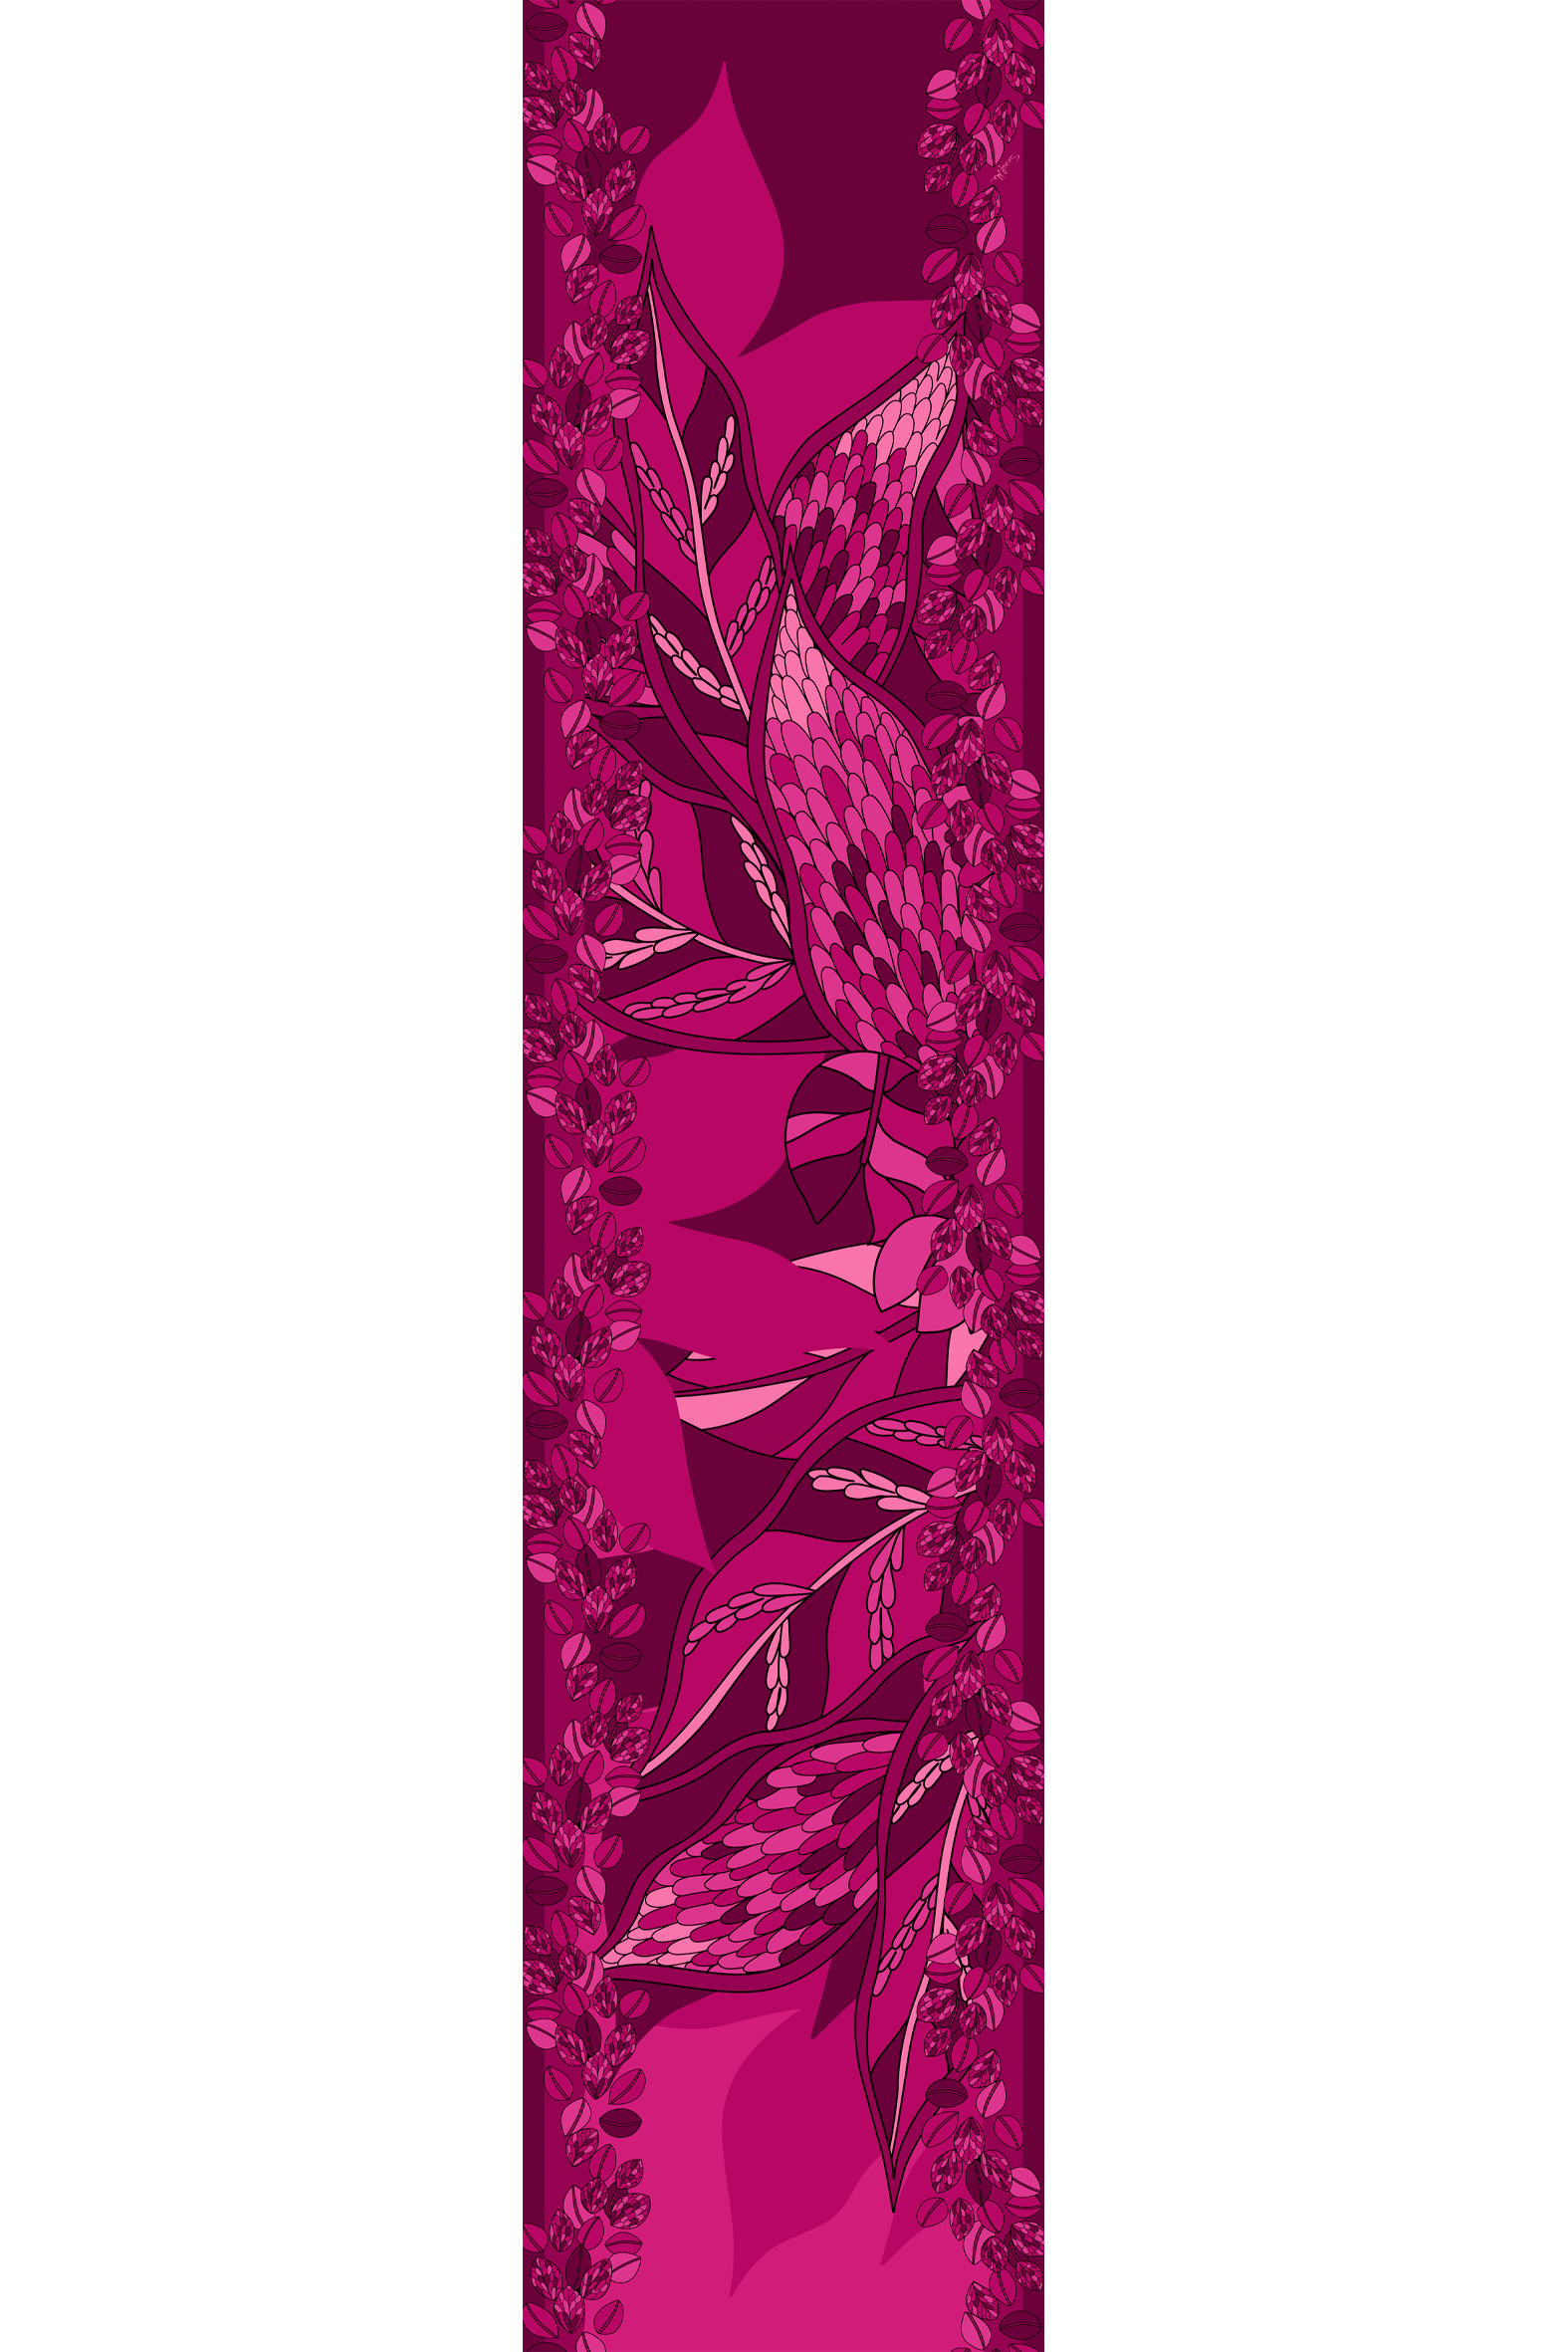 Echarpe Ramos de púrpura pink em mousseline de poliéster | 45X210cm